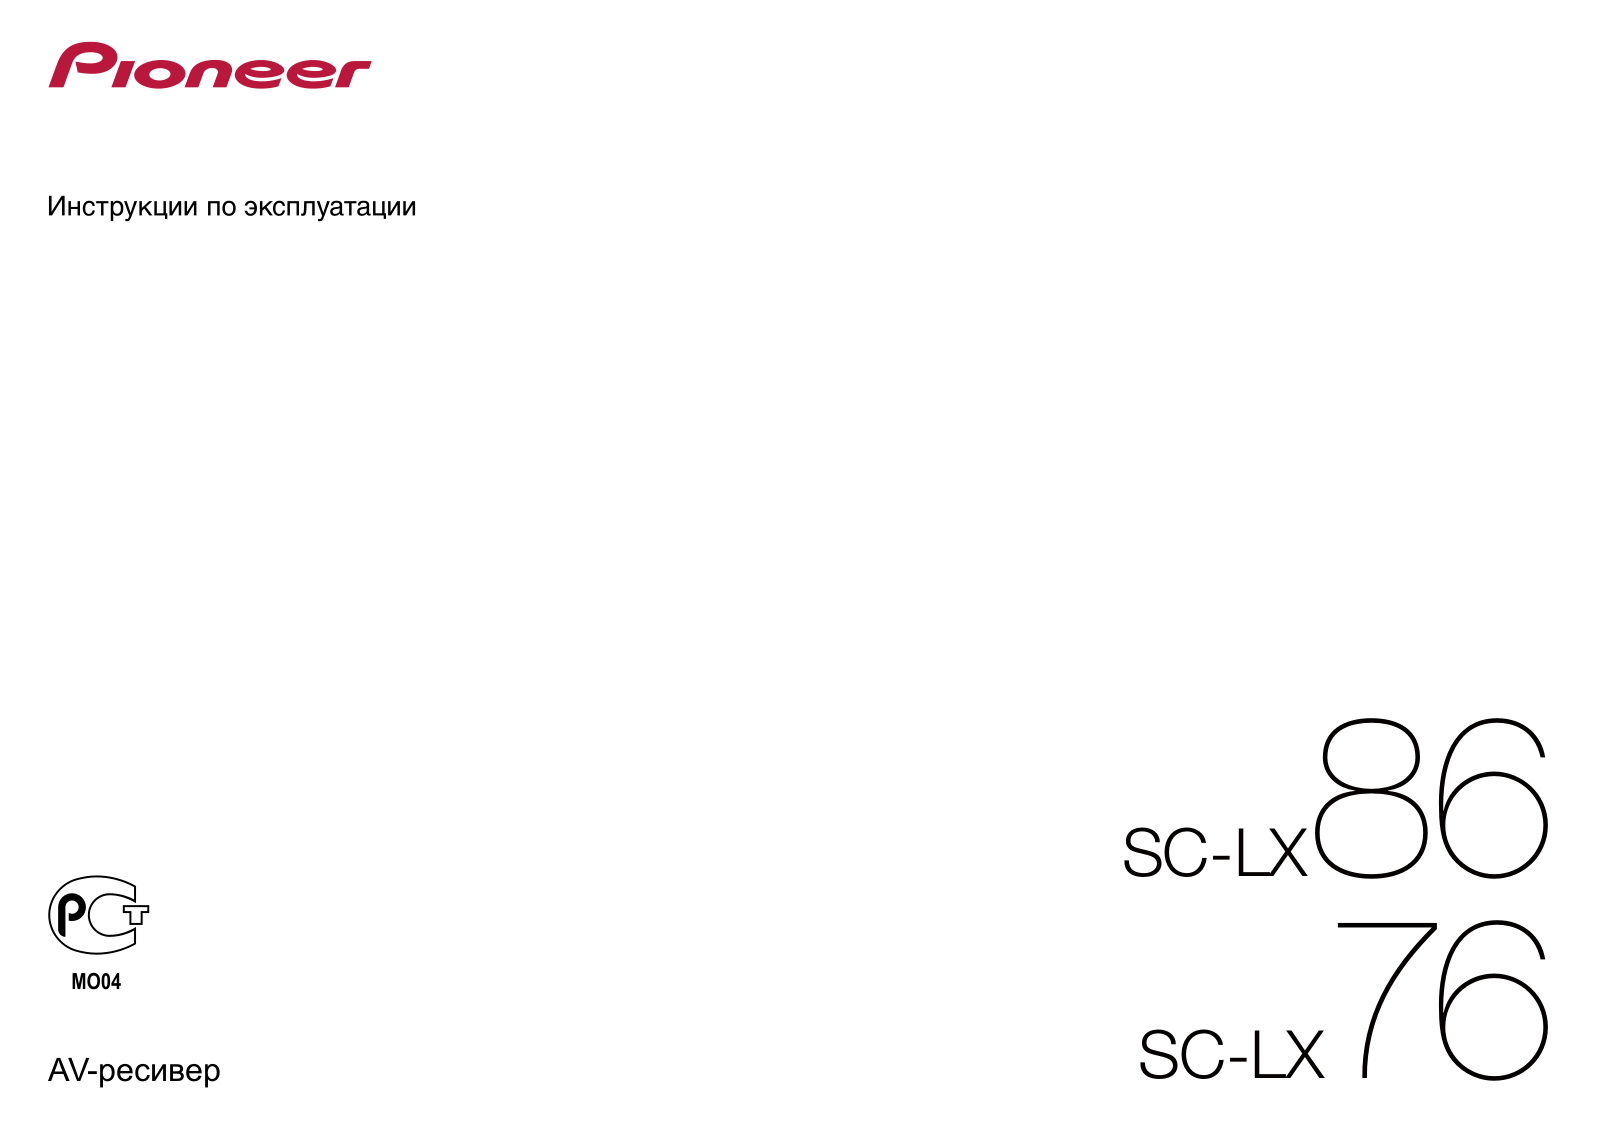 Pioneer SC-LX76, SC-LX86 User Manual